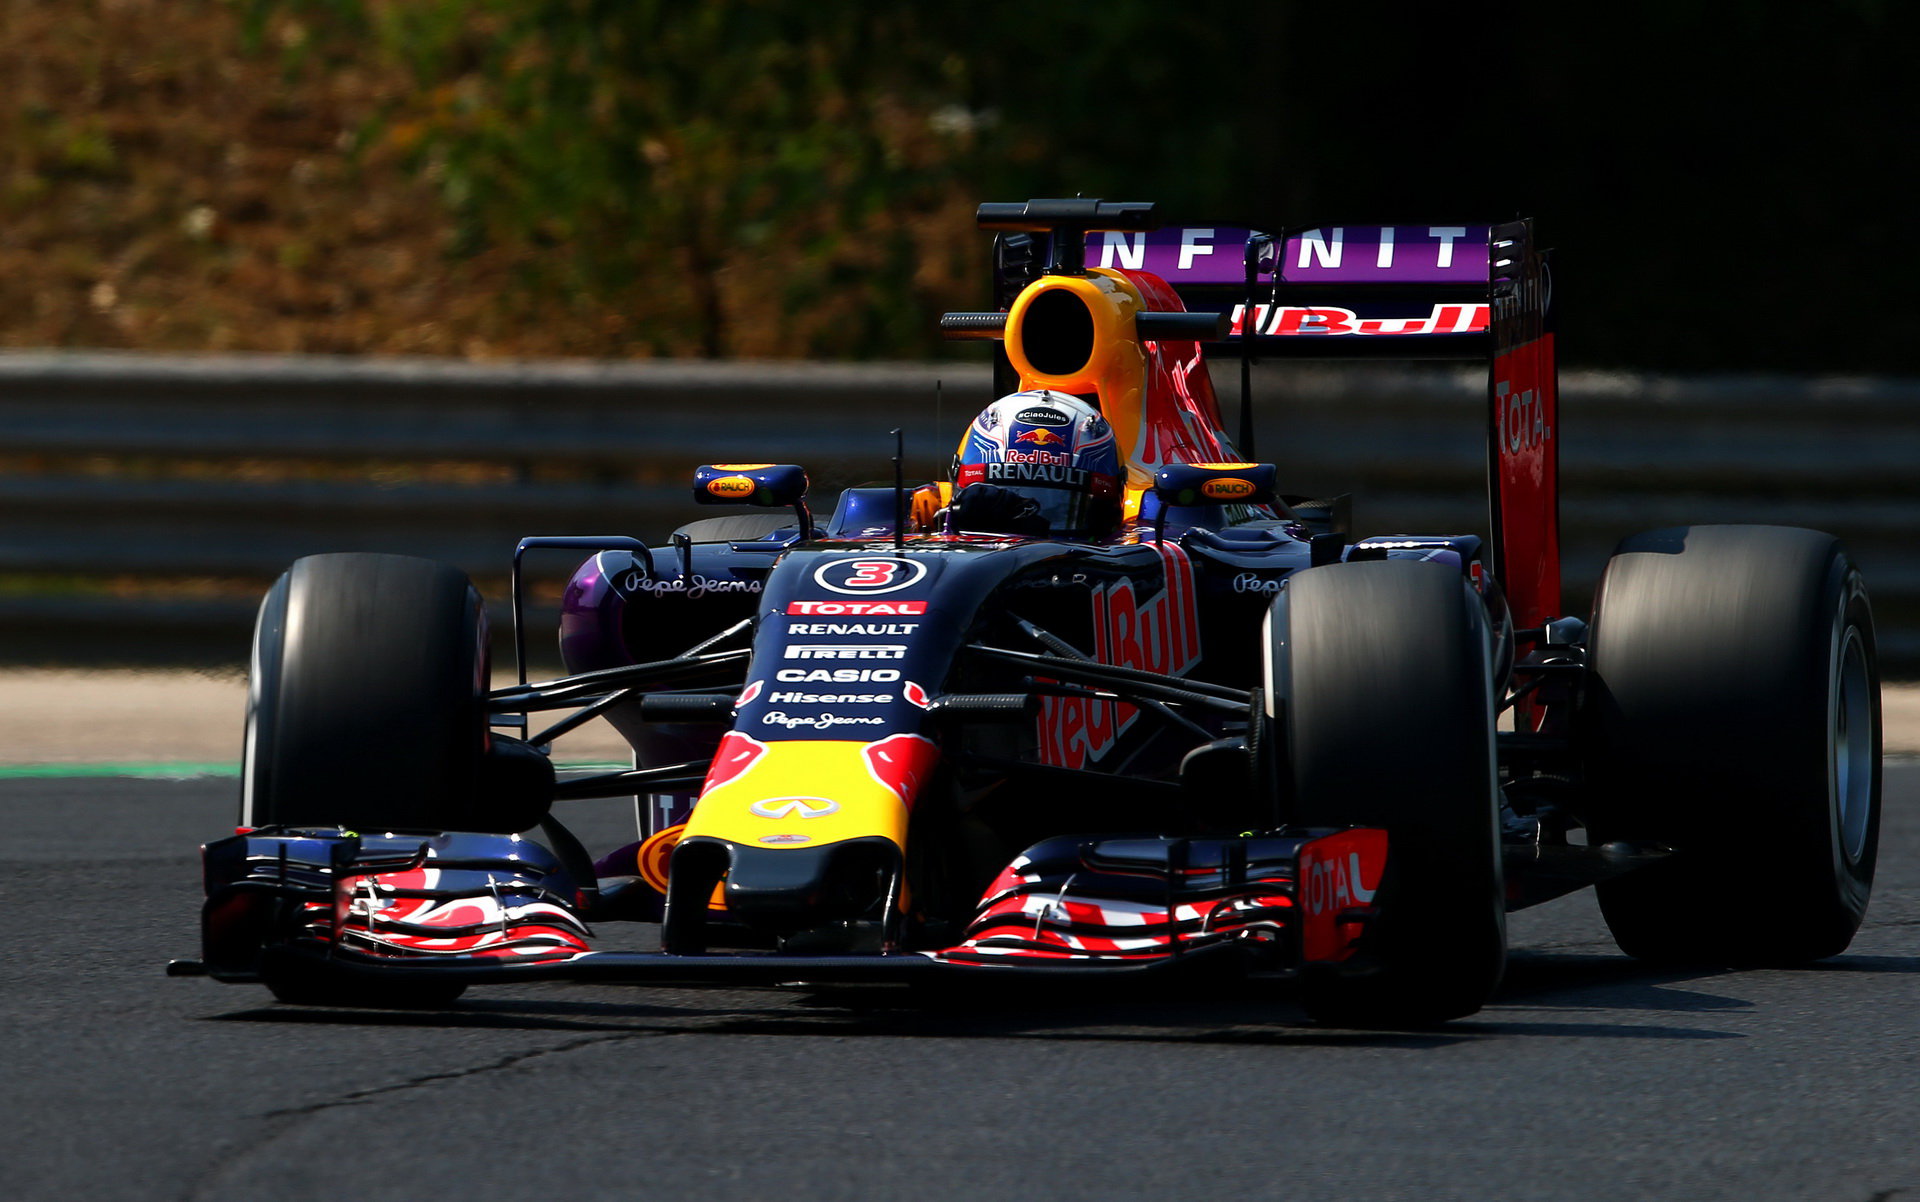 Nejrychlejší kolo závodu patří Danielovi Ricciardovi